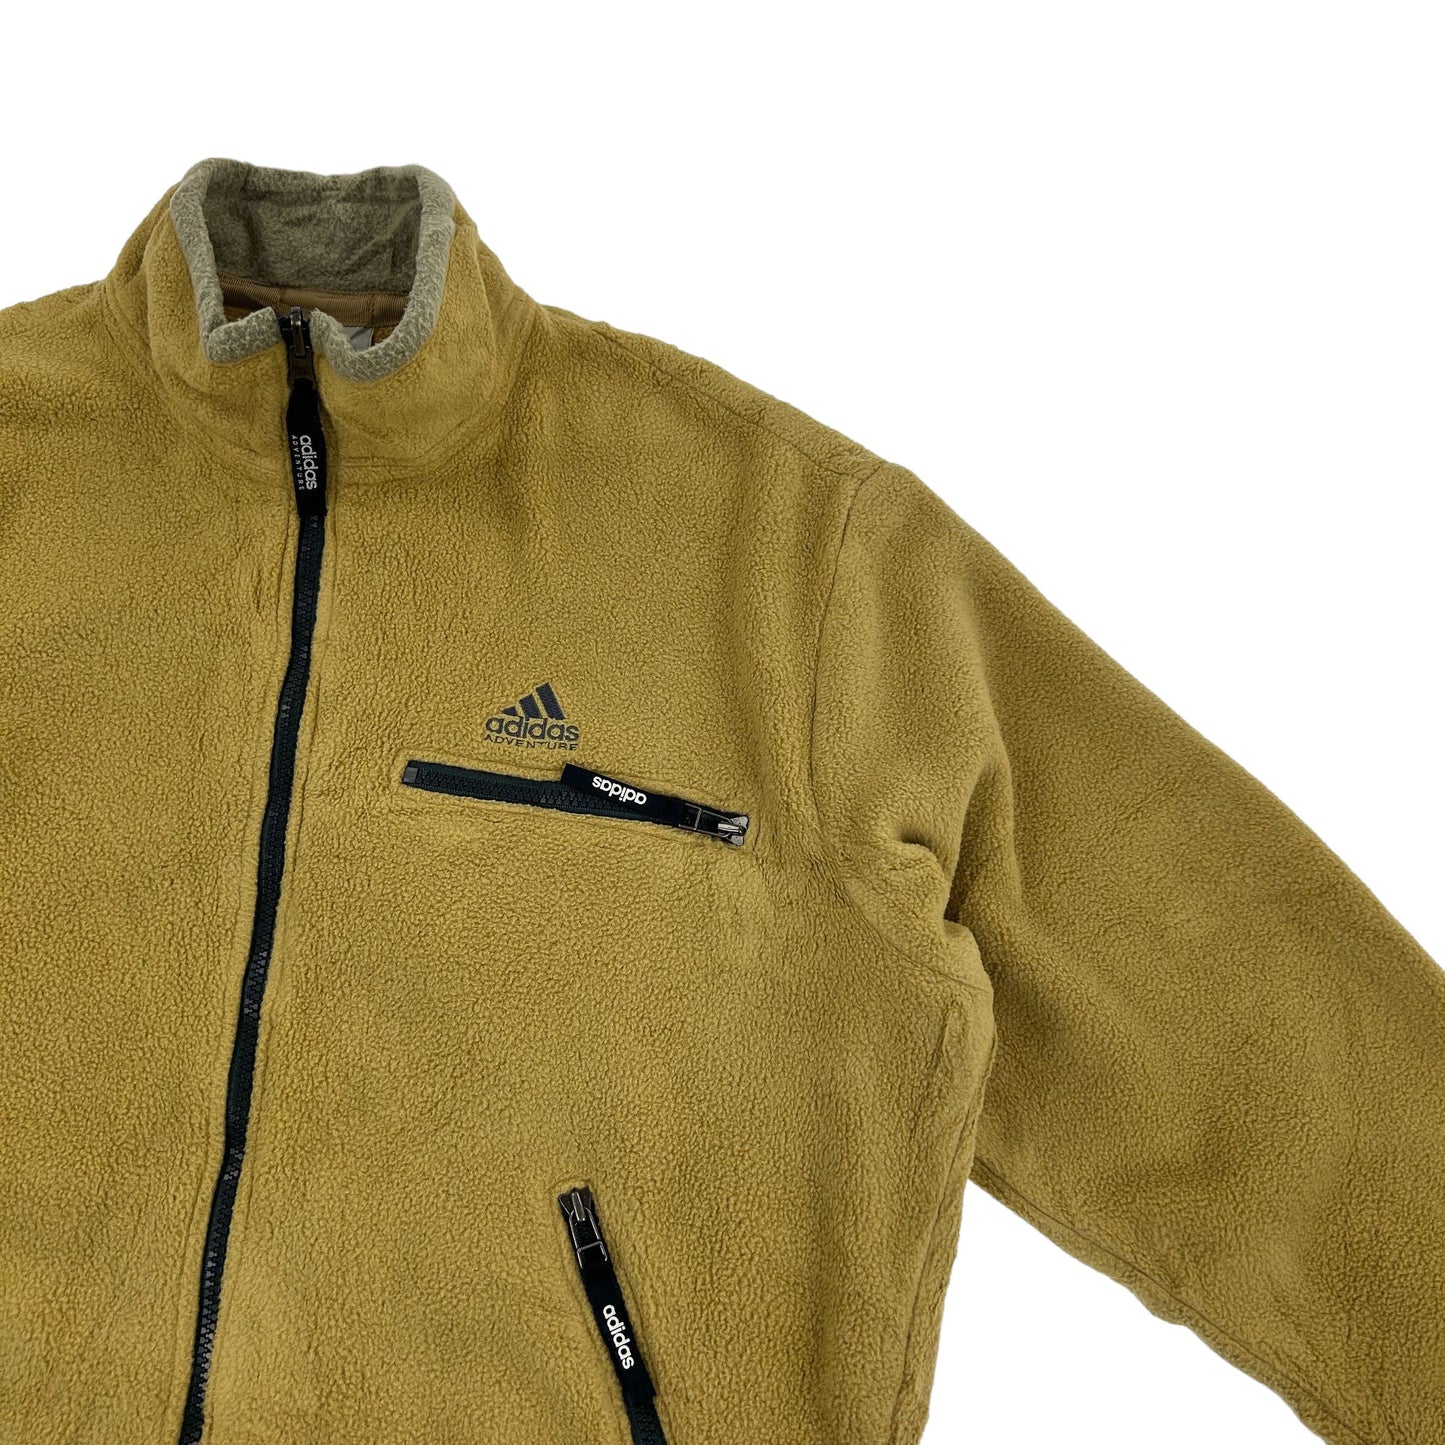 Vintage Adidas Zip Up Fleece Size M